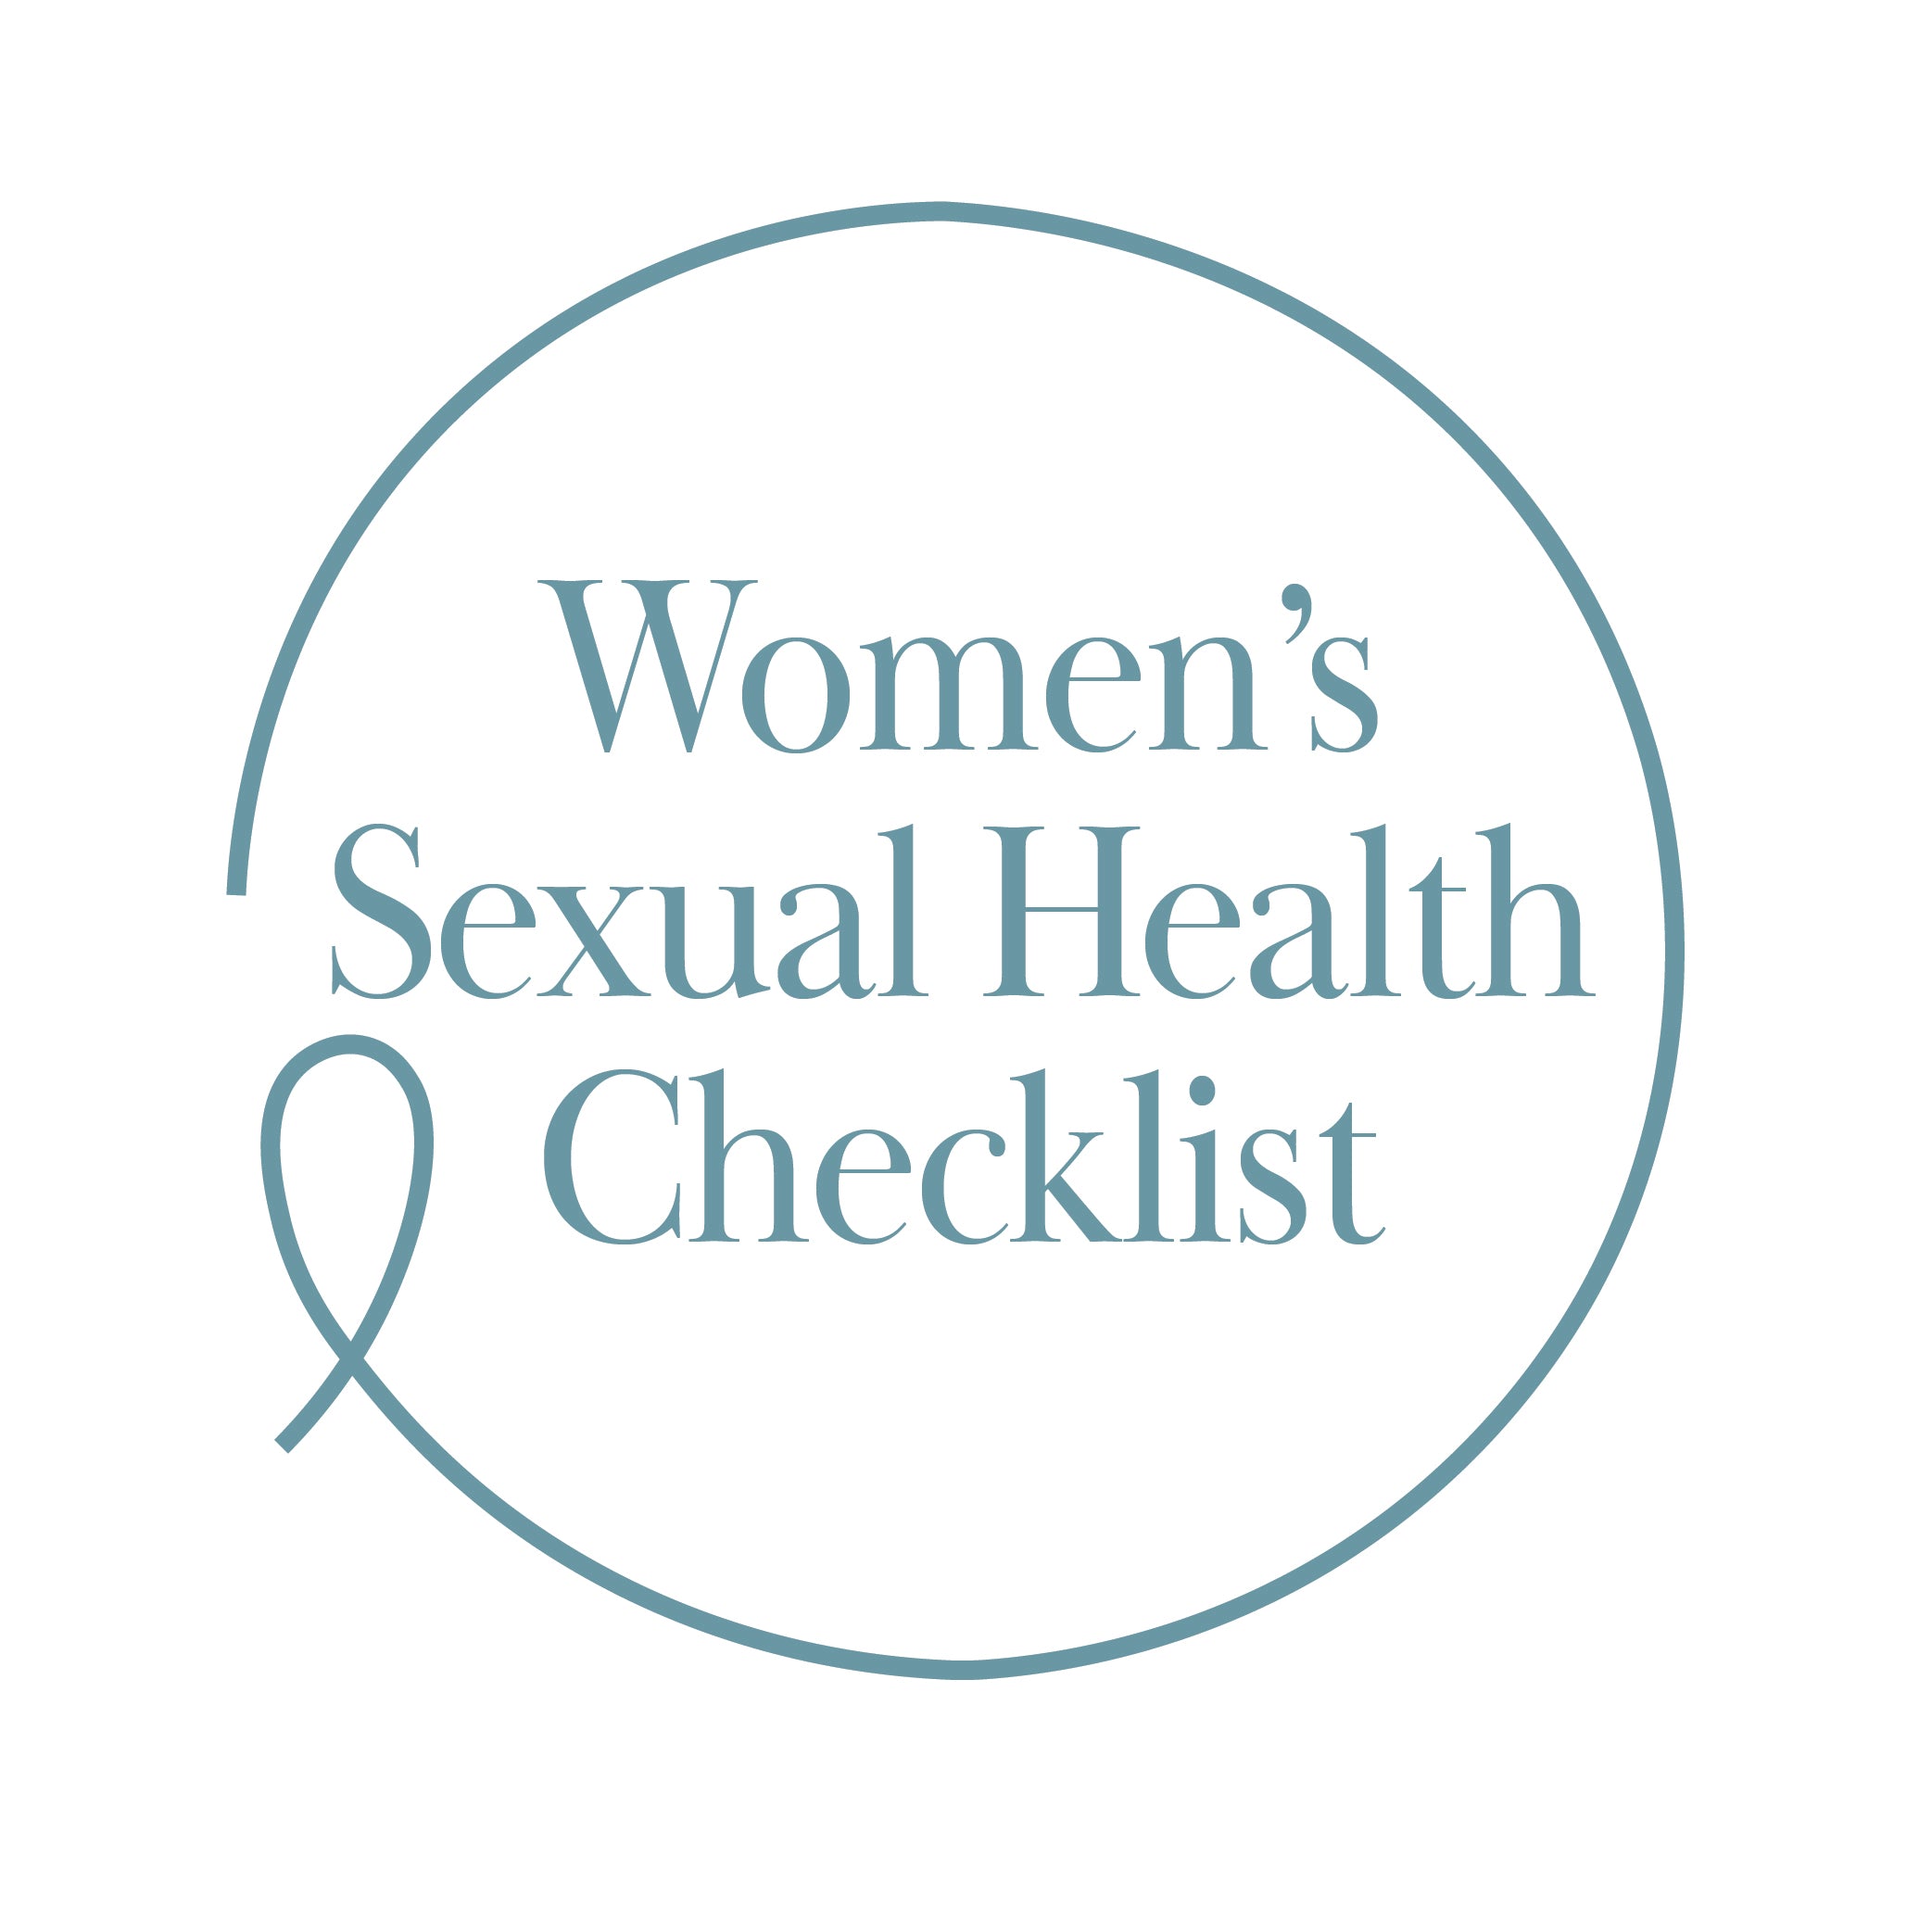 Women's Sexual Health Checklist